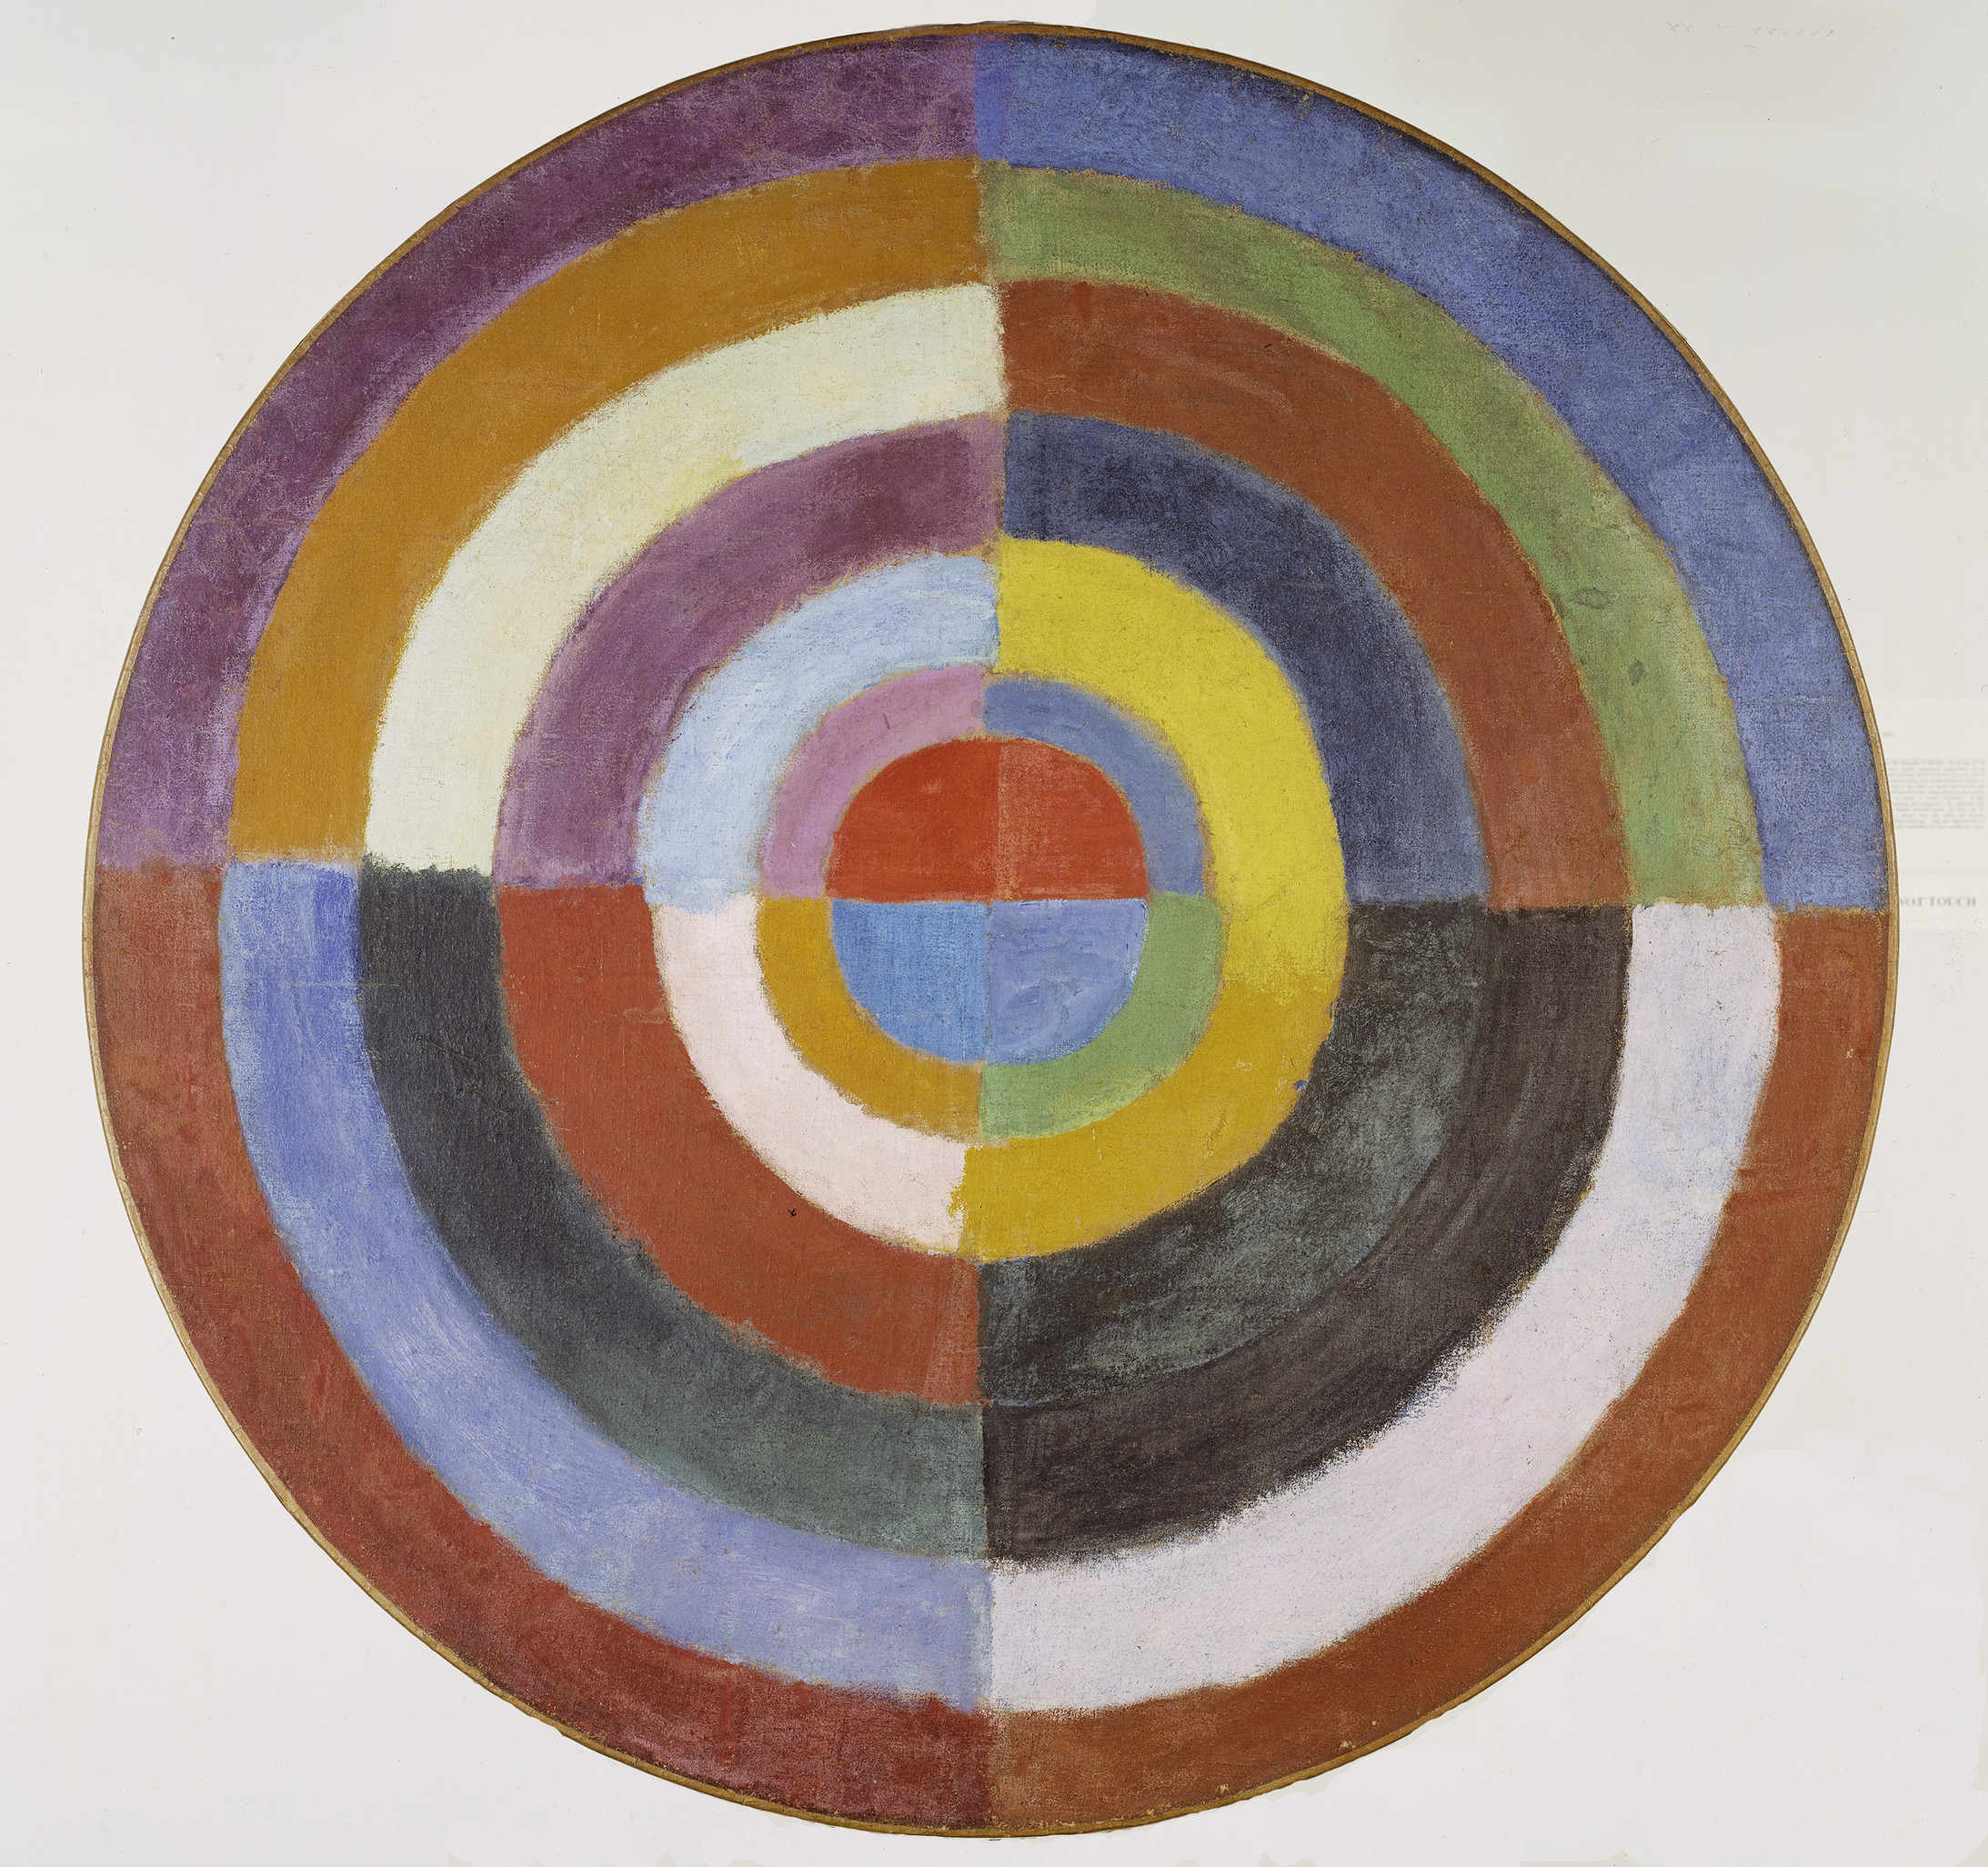 Robert Delaunay : Disque (Le premier disque), 1913, Öl auf Leinwand, Durchmesser 124 cm, Esther Grether Familiensammlung